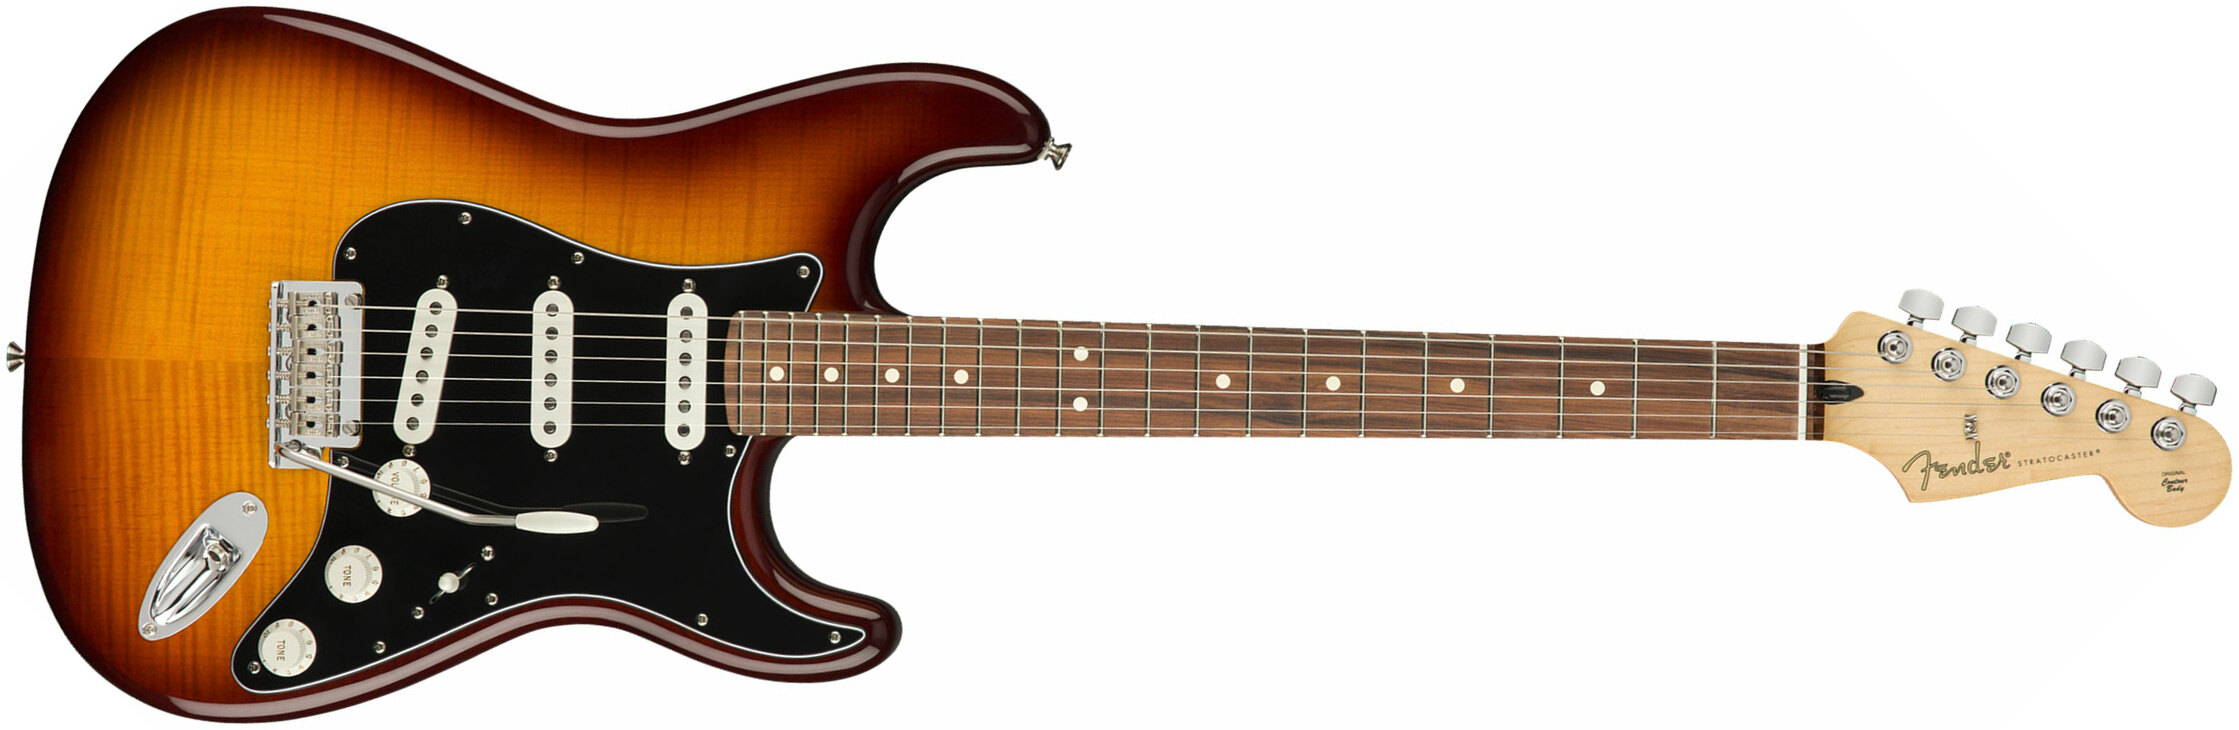 Fender Strat Player Plus Top Mex 3s Trem Pf - Tobacco Burst - Str shape electric guitar - Main picture